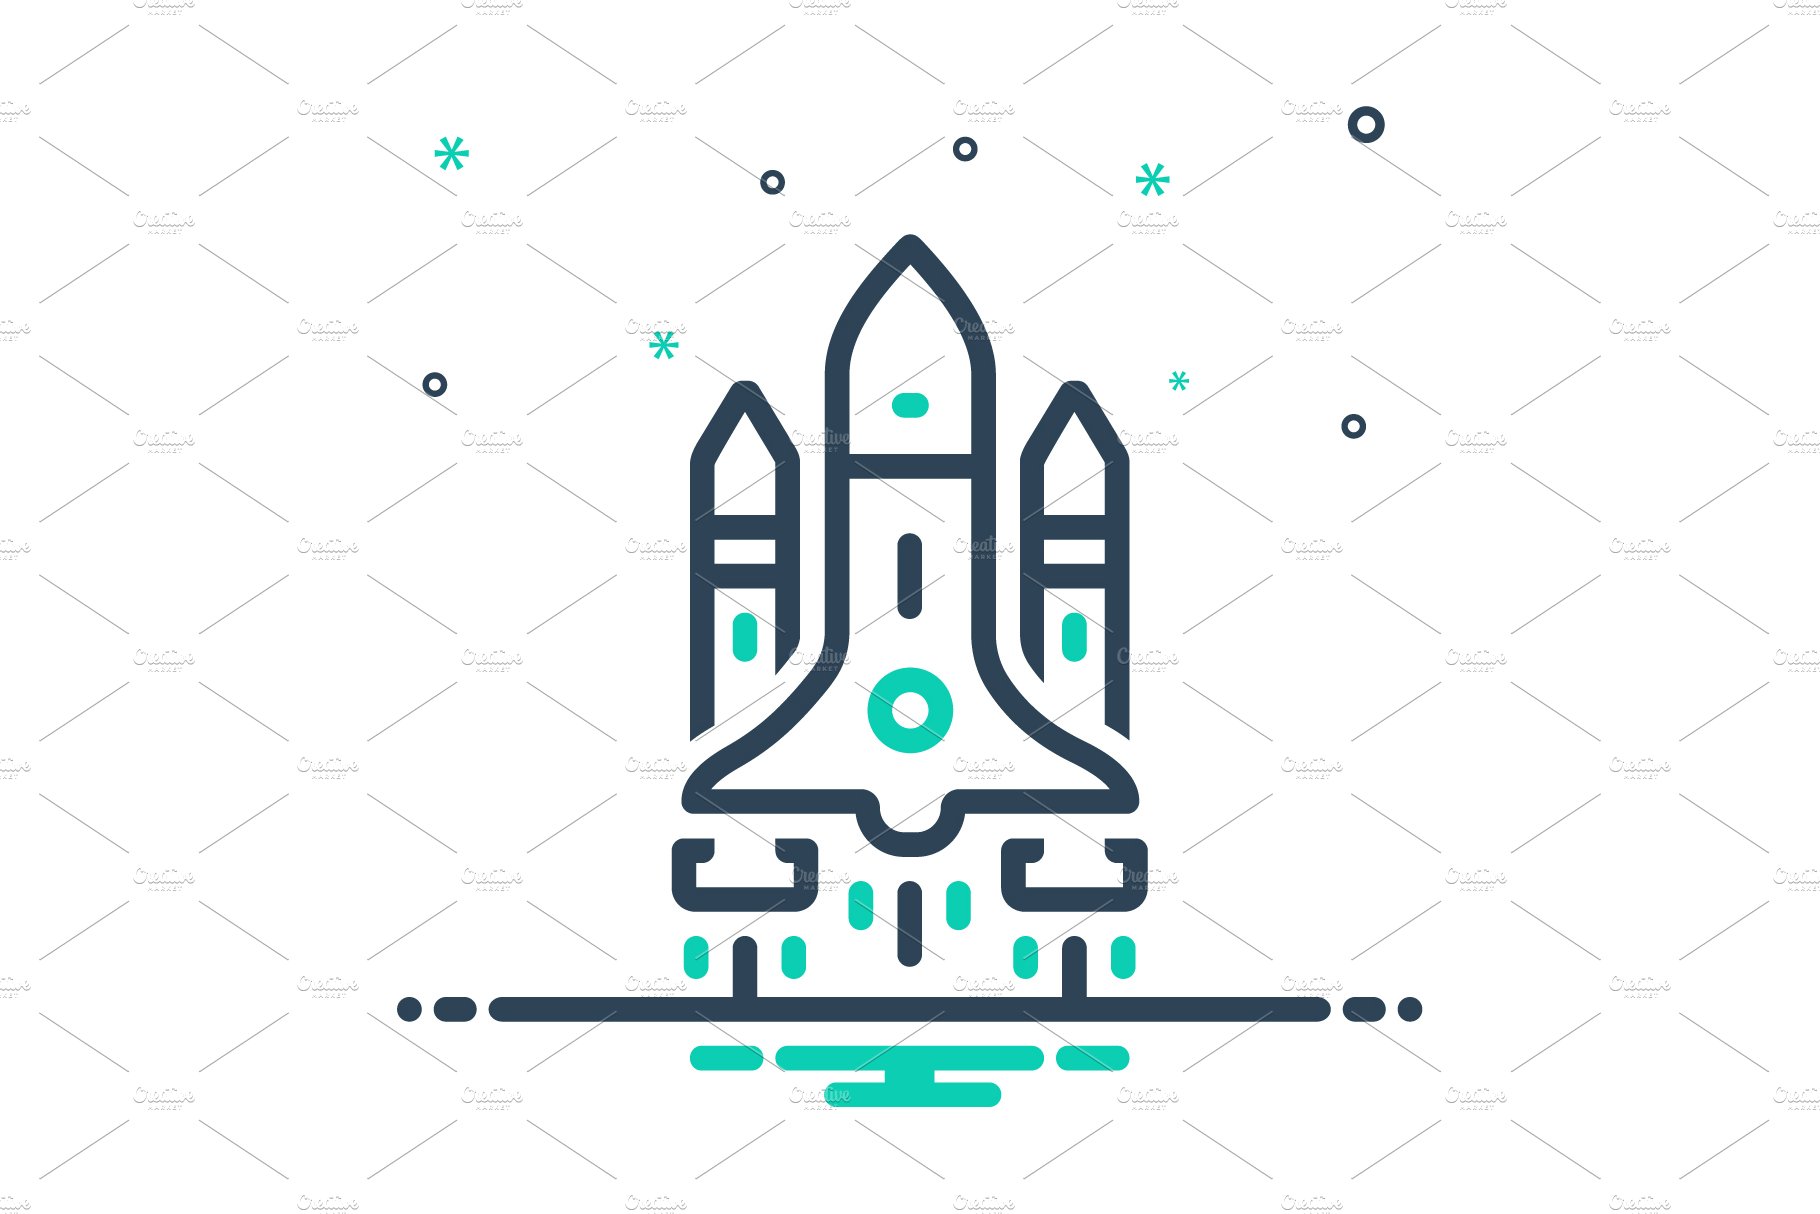 Shuttle rocket mix icon cover image.